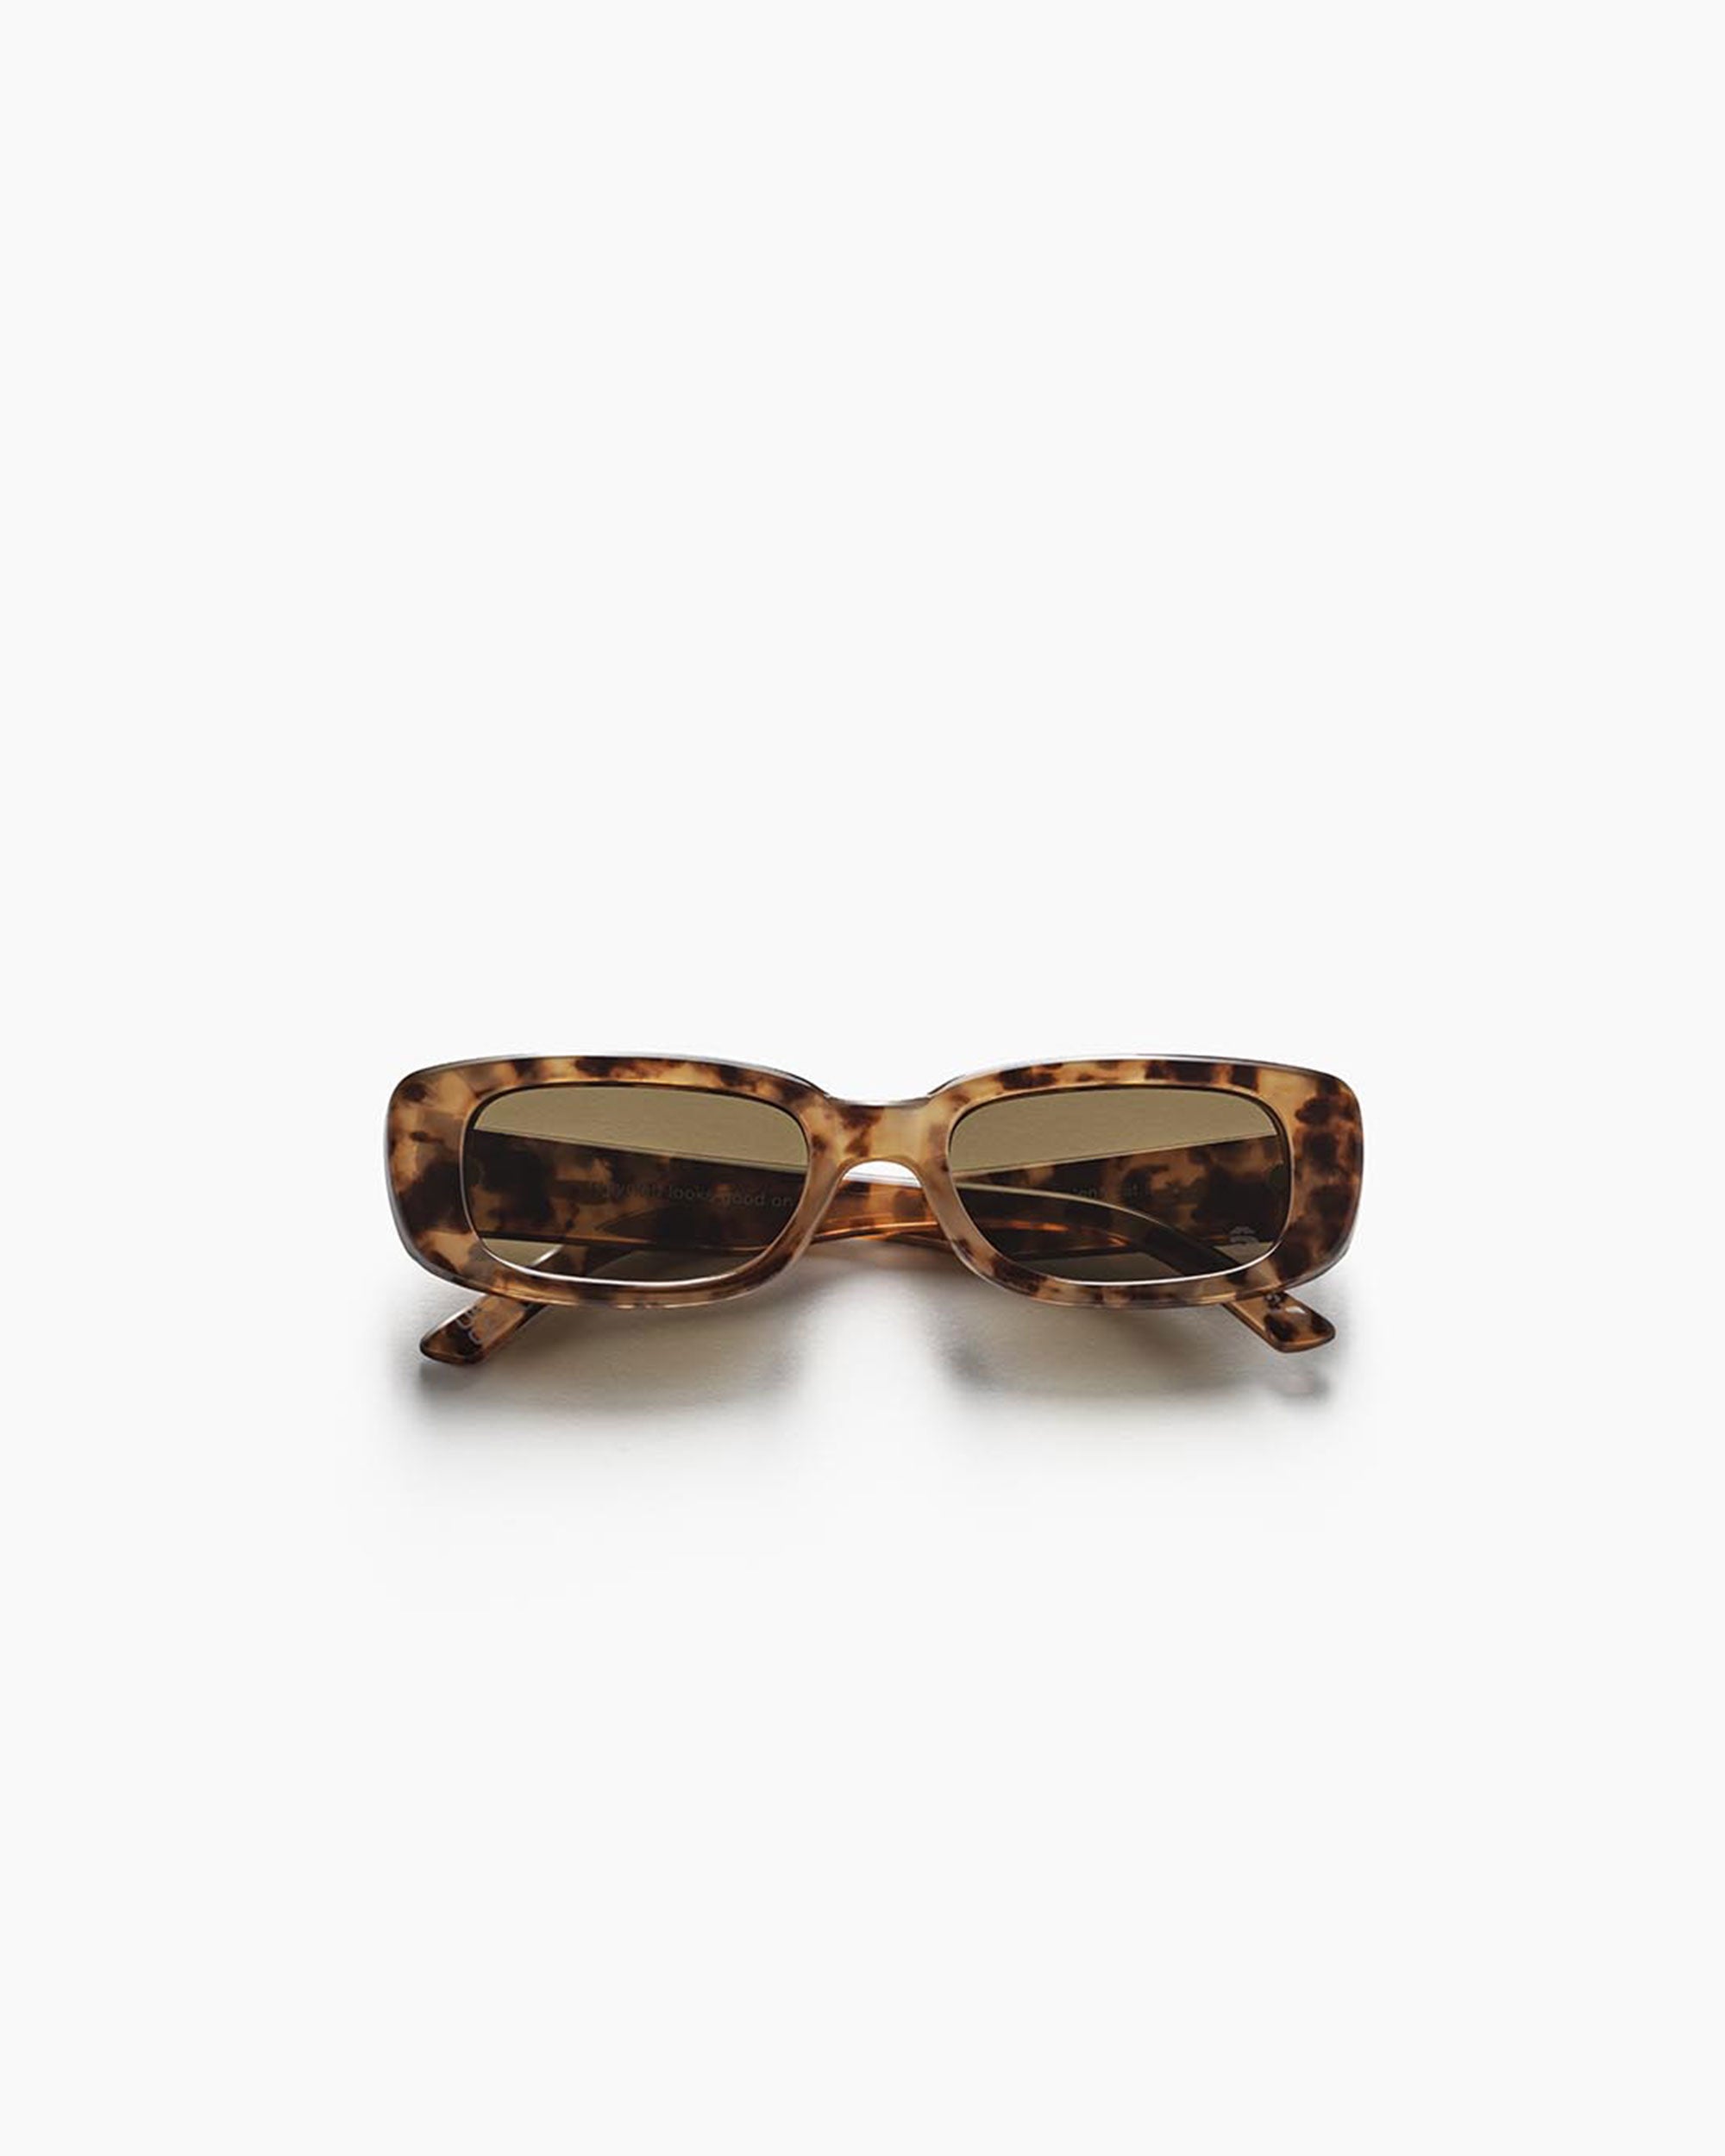 Shop Szade Dollin Sunglasses in Coquina Tortoise Online | Szade 